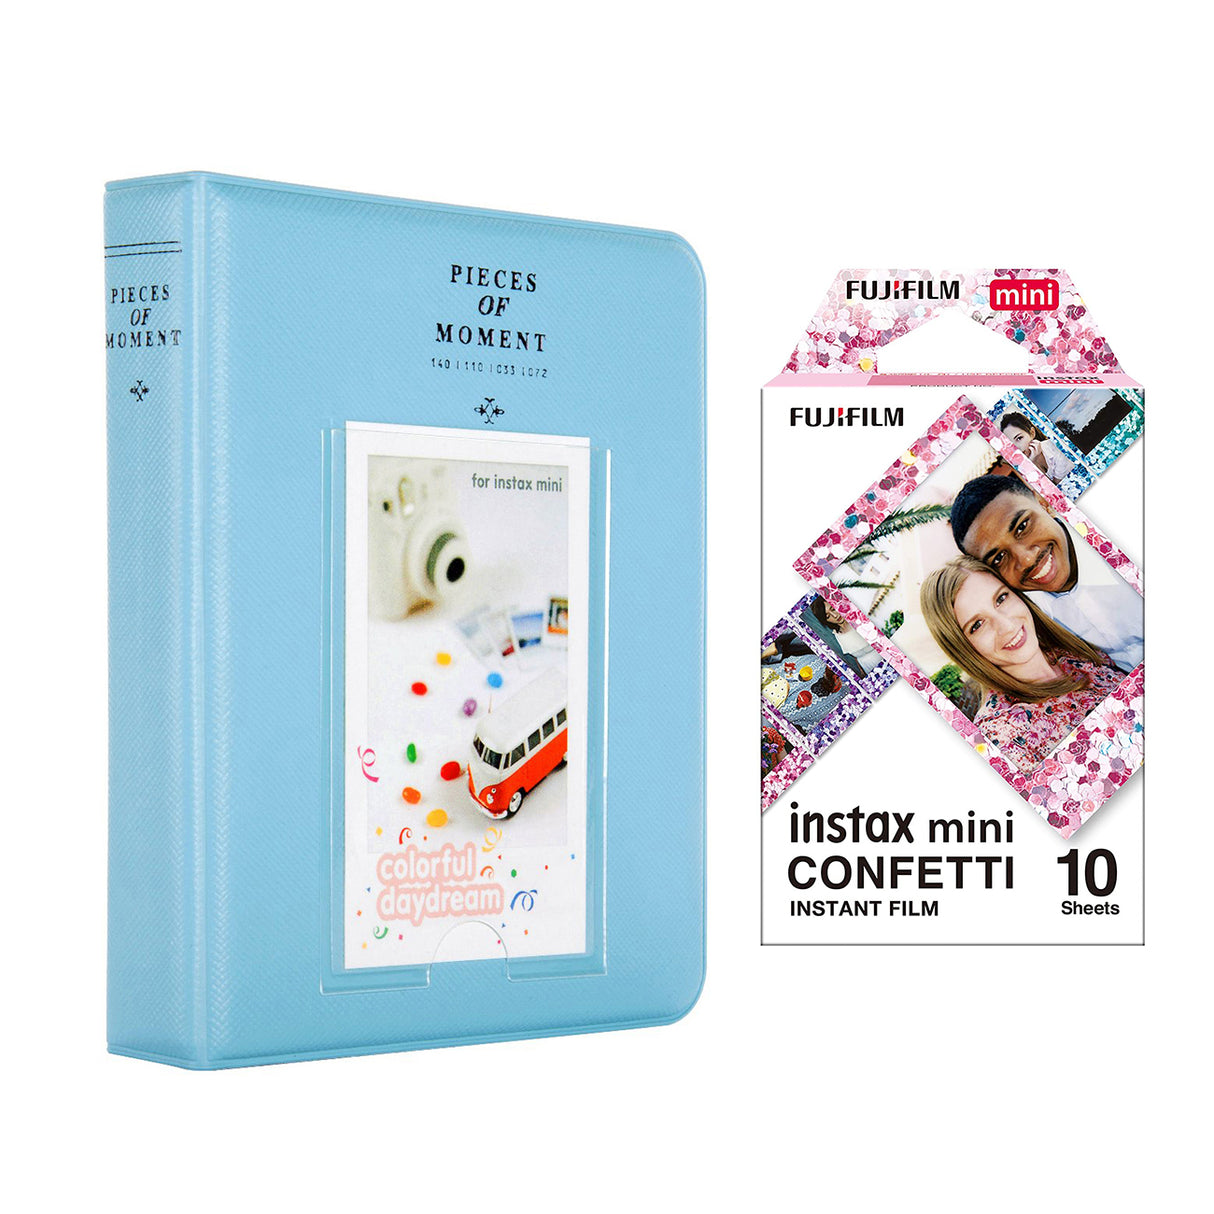 Fujifilm Instax Mini 10X1 confetti Instant Film with Instax Time Photo Album 64 Sheets Sky blue